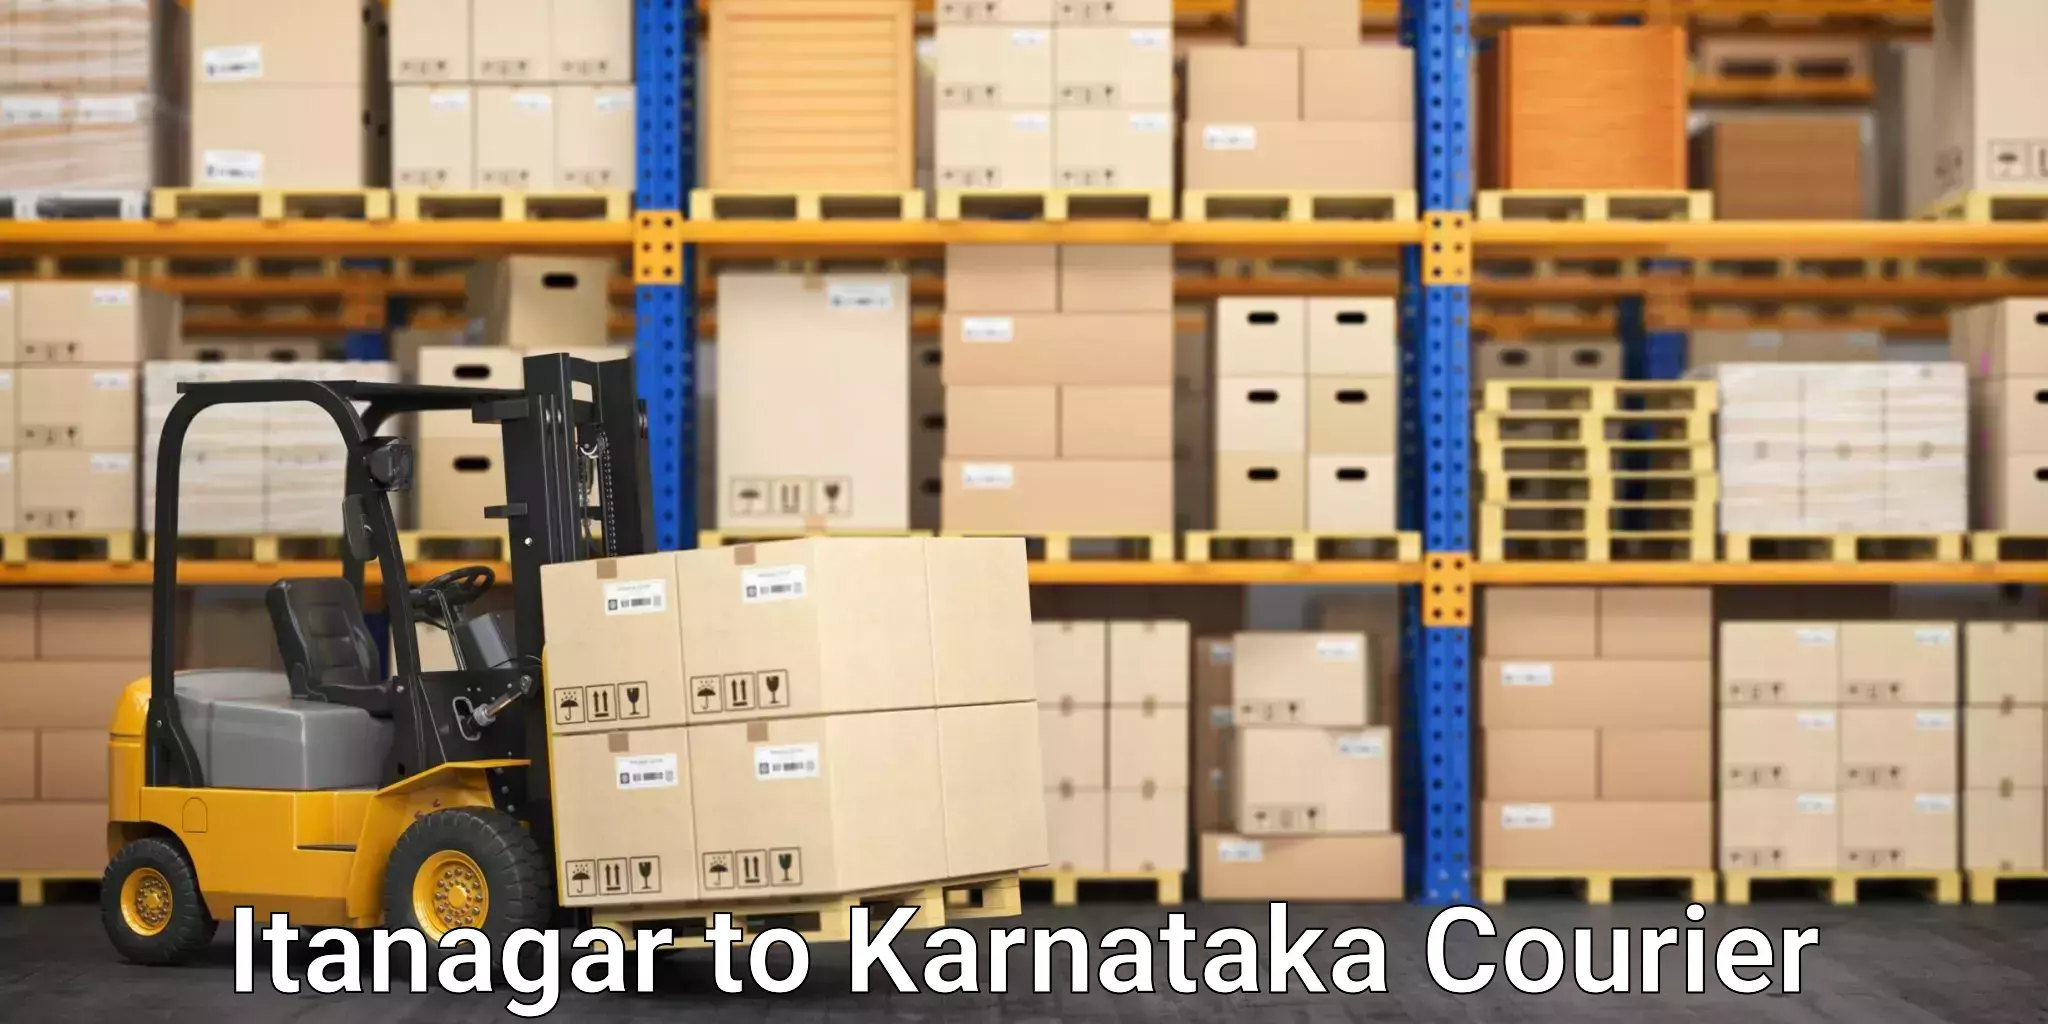 Logistics service provider Itanagar to Channagiri